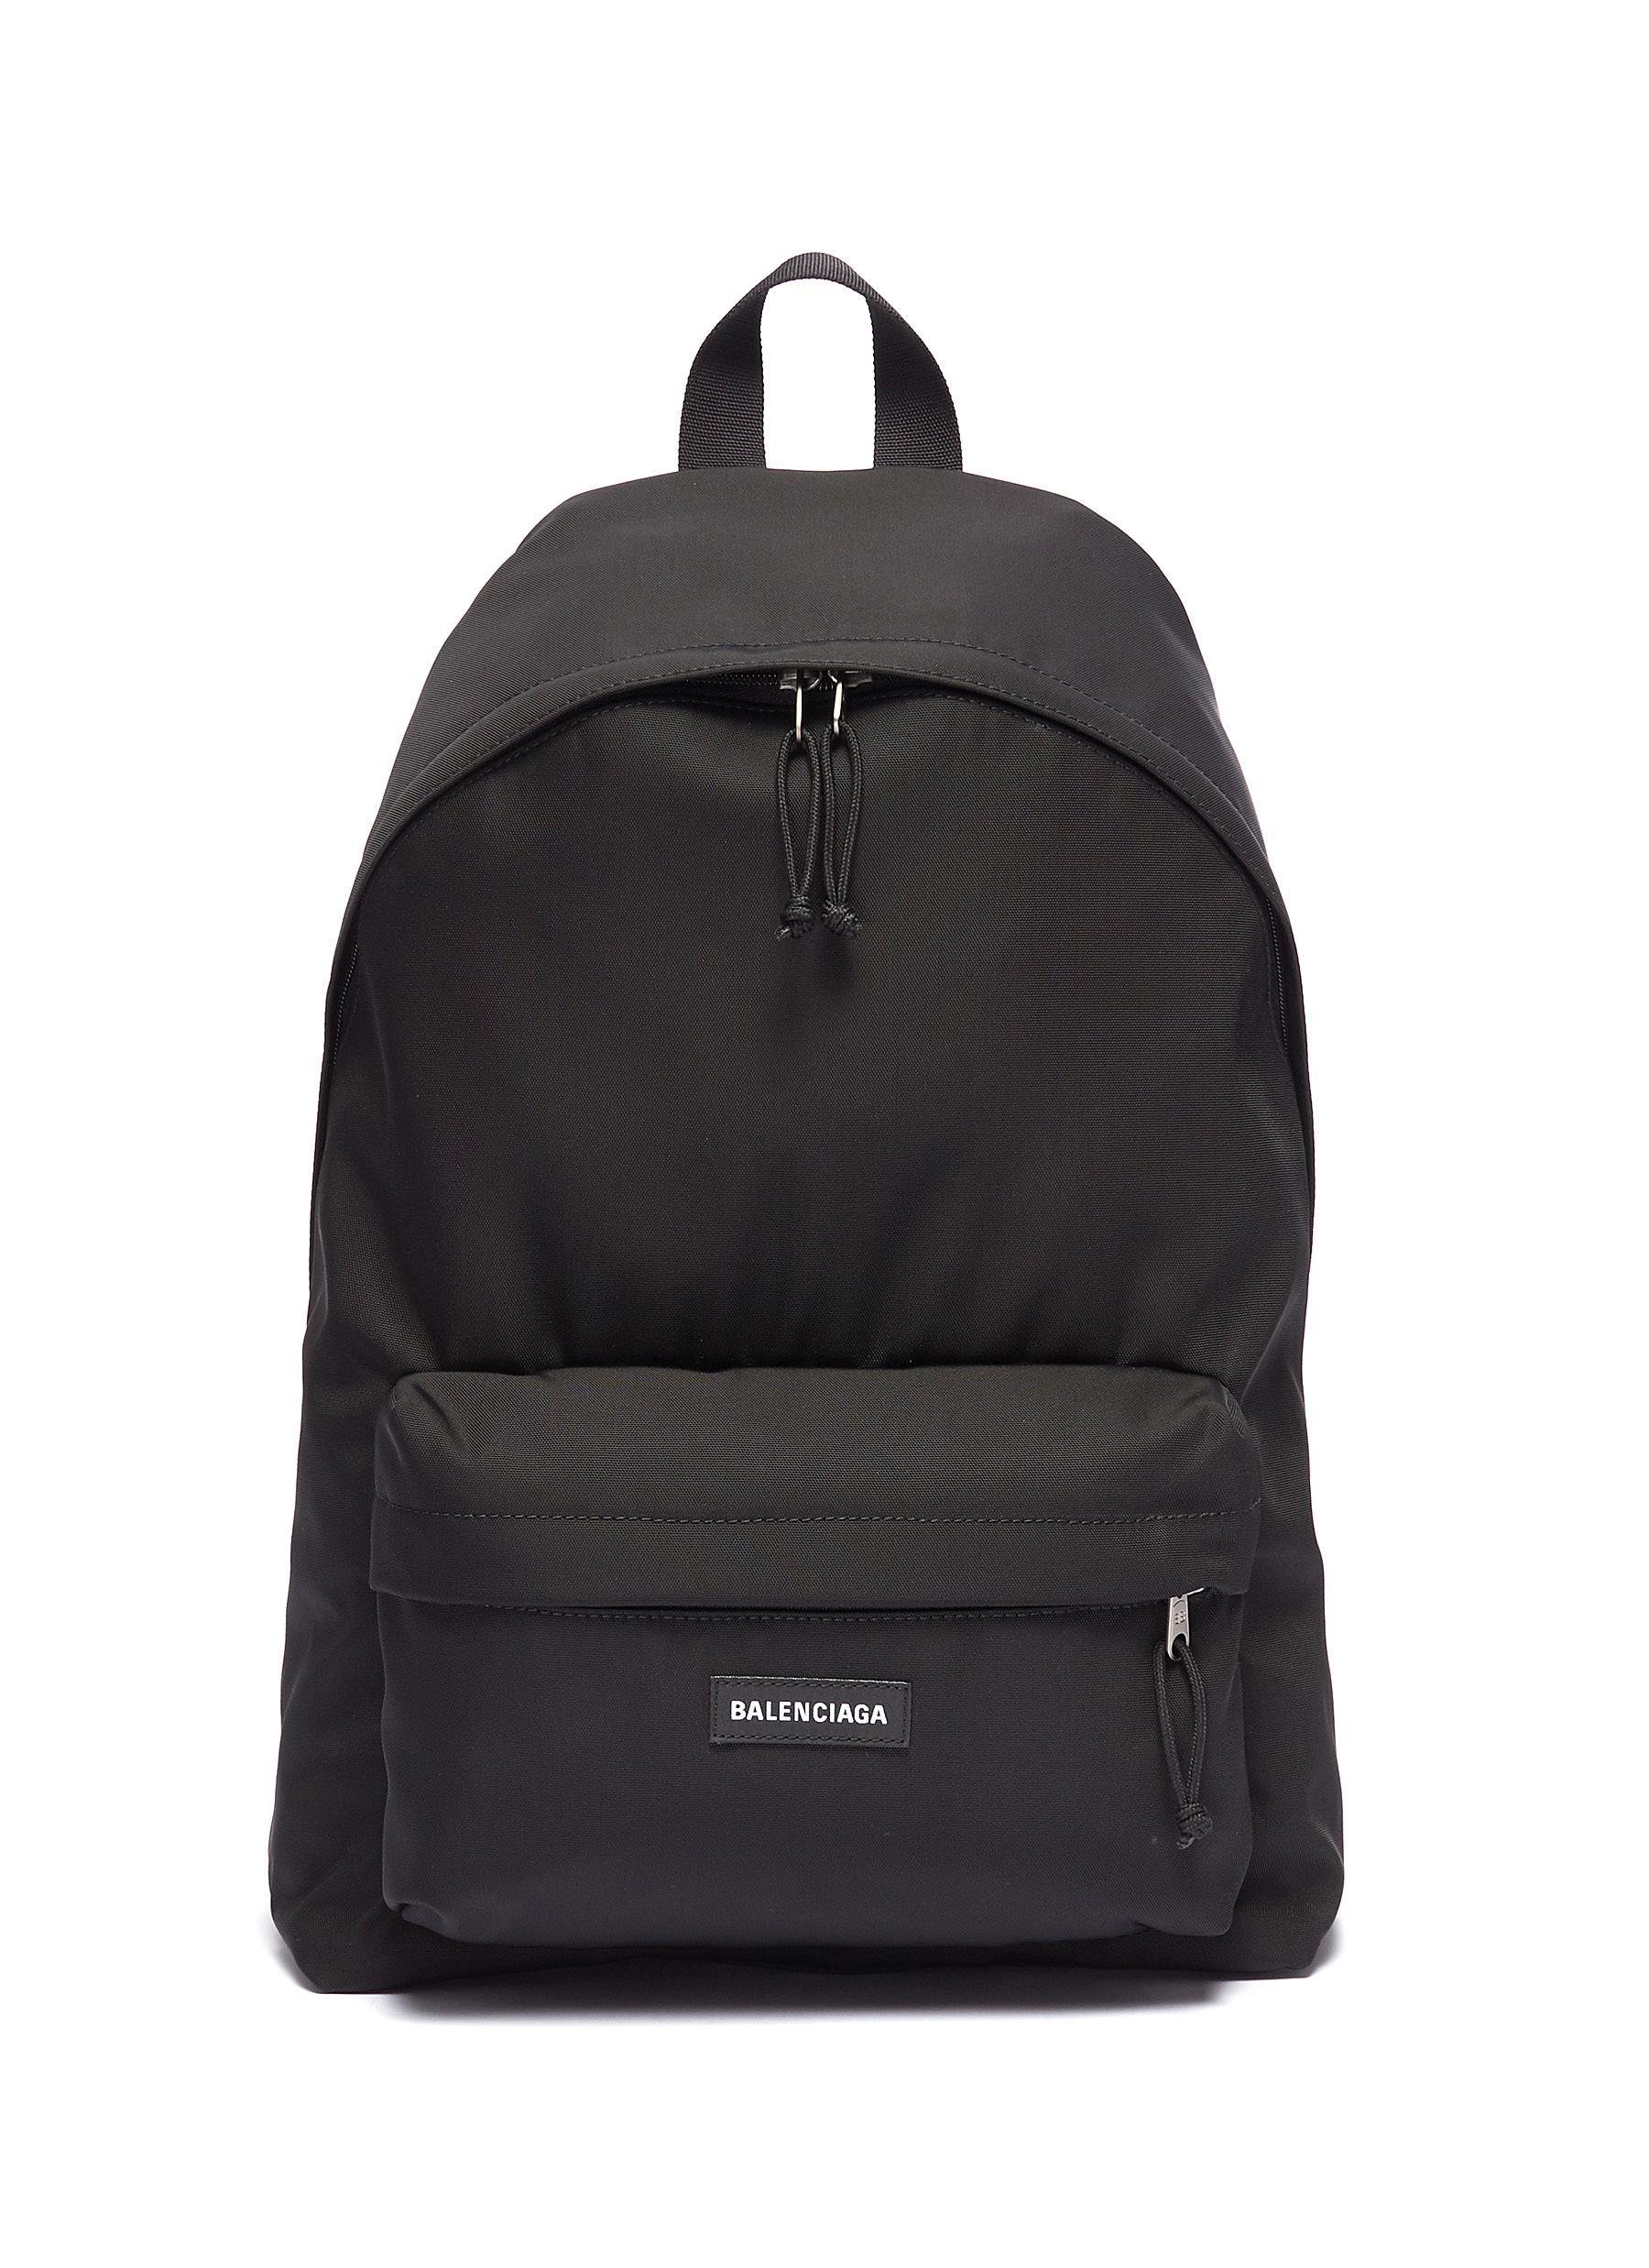 Balenciaga Synthetic 'explorer' Backpack in Black for Men - Lyst